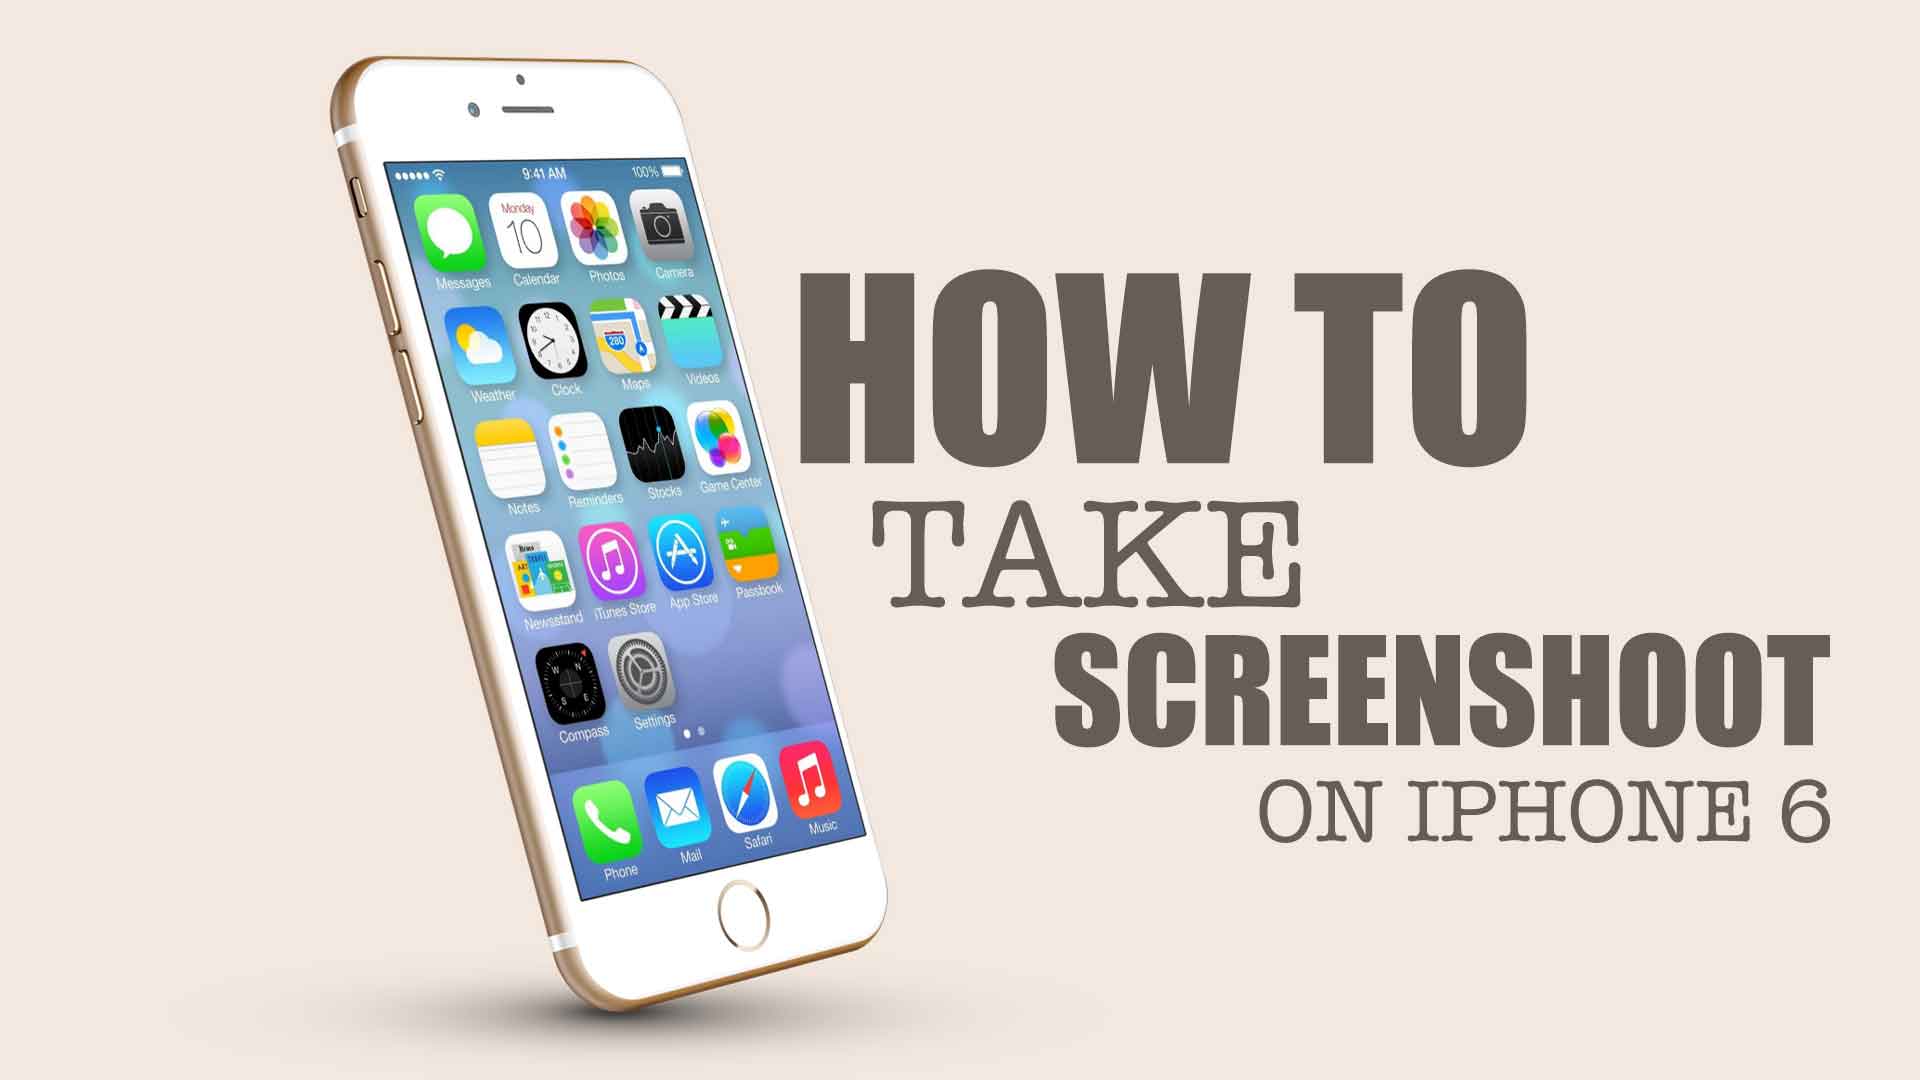 How to screenshot on iPhone 6